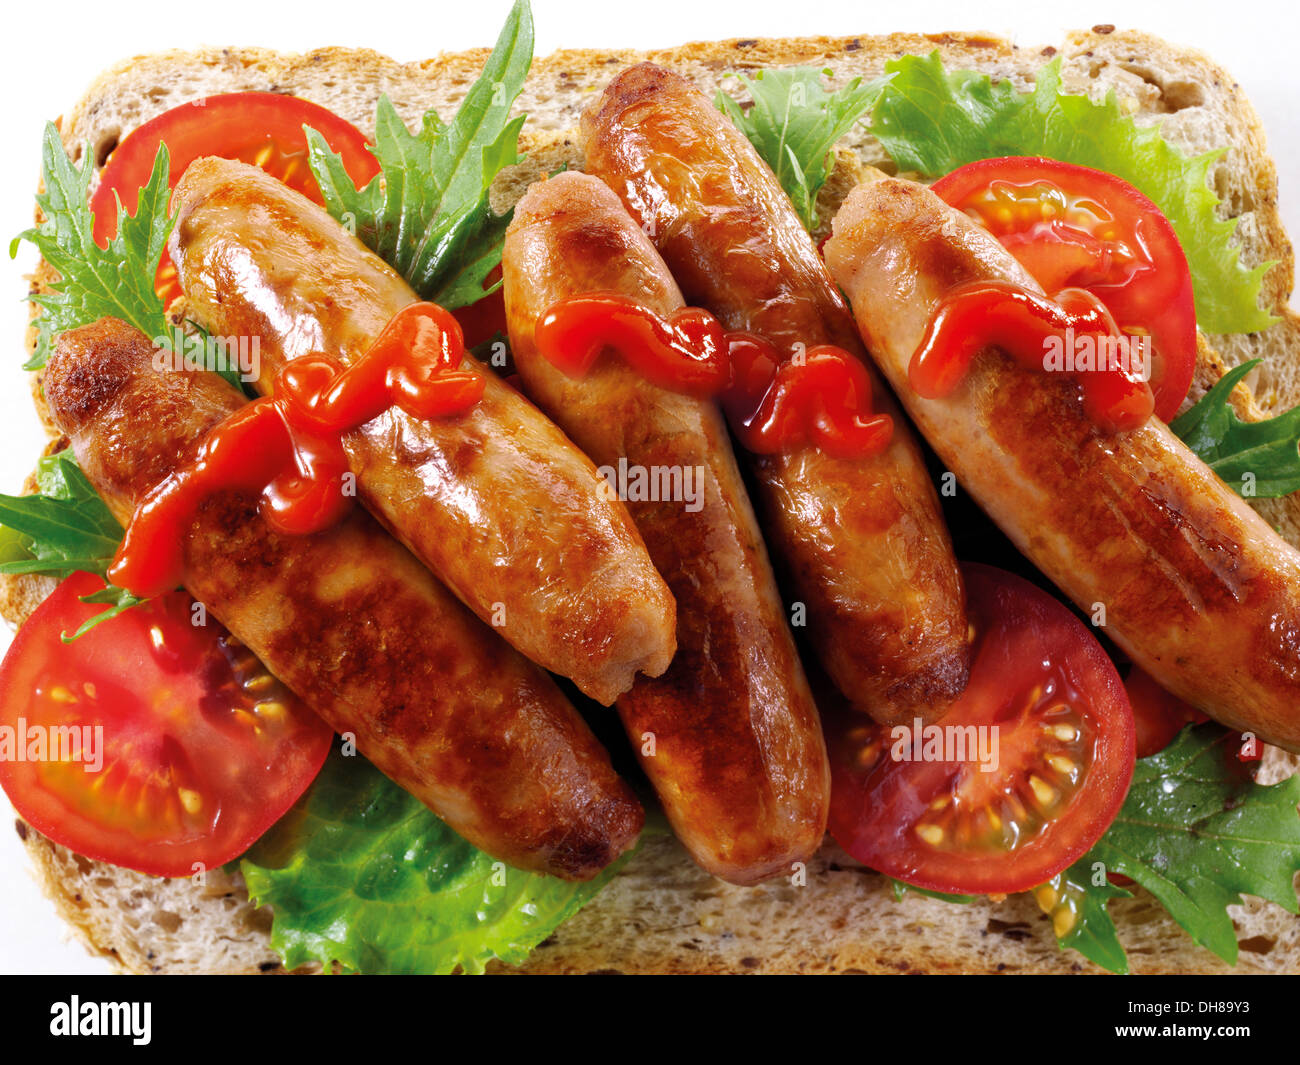 British Food - Sausage Sandwich Stock Photo